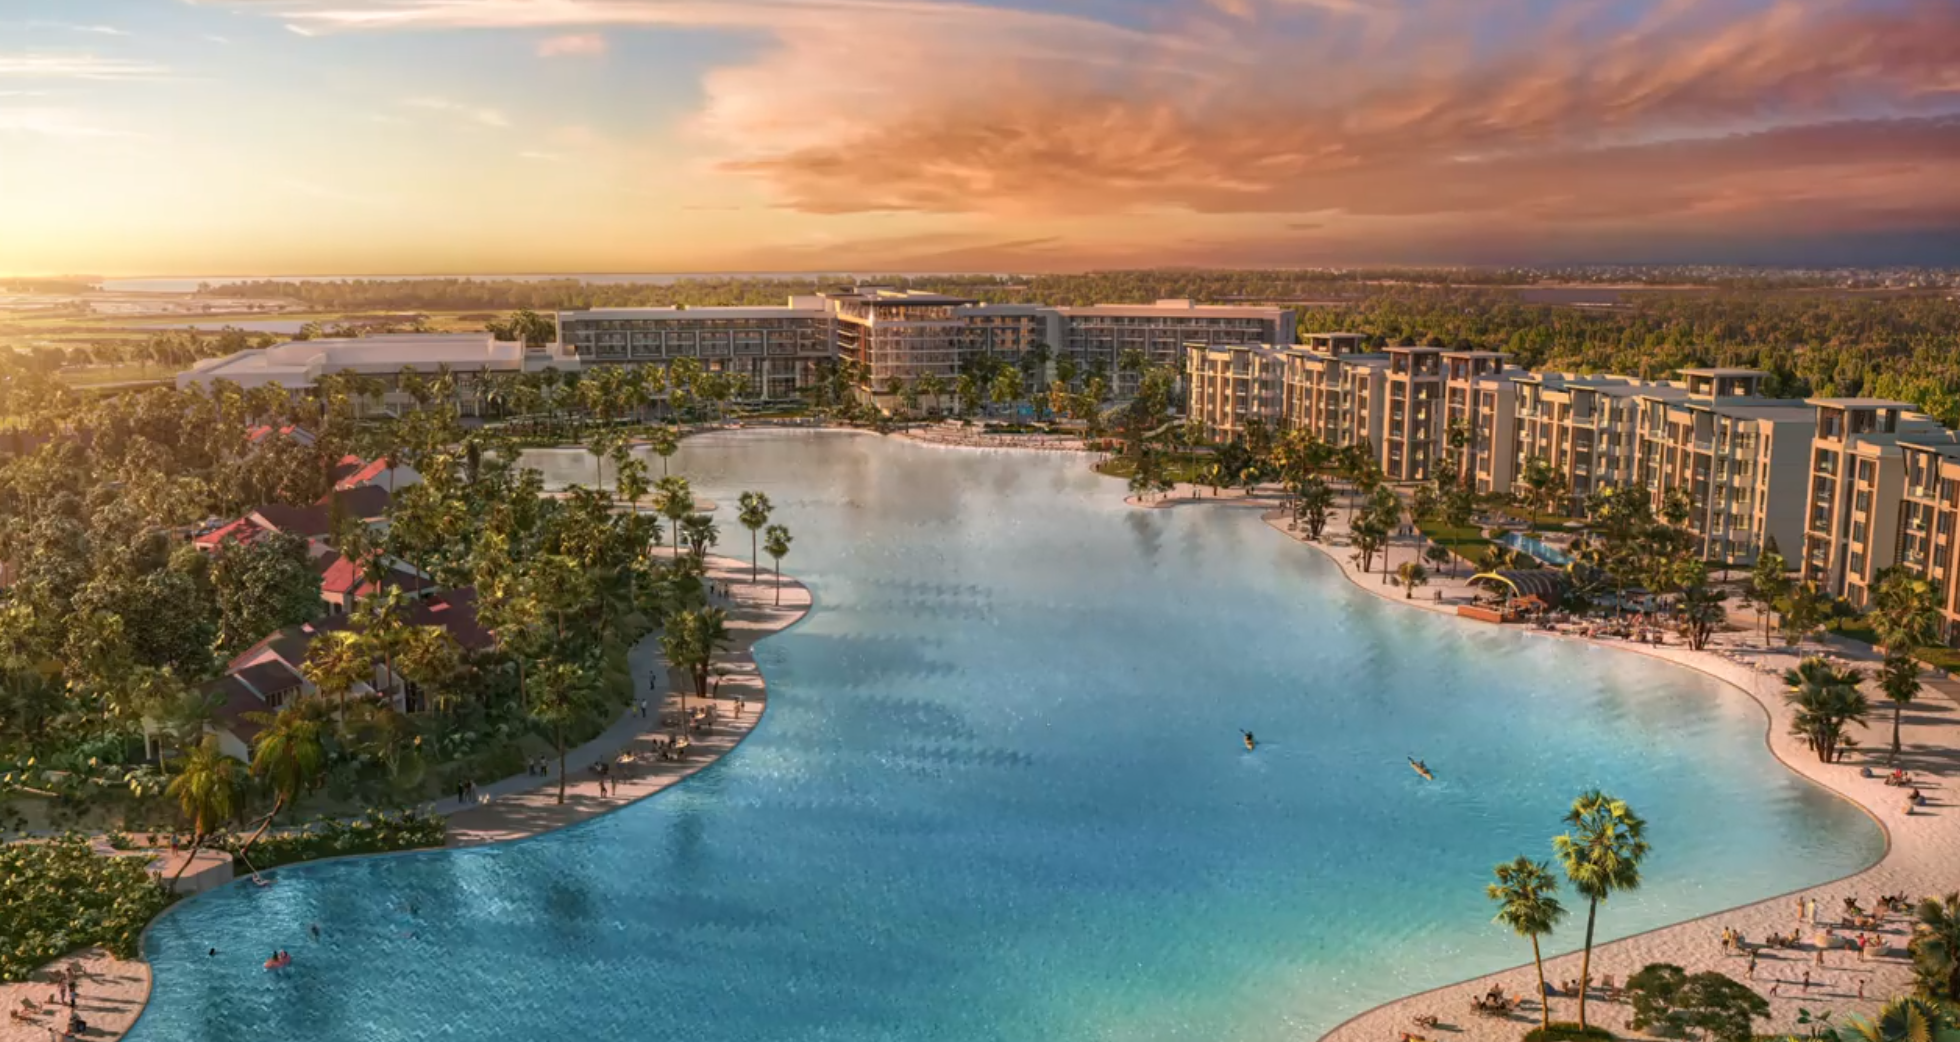 Luxury Hilton resort breaks ground next to Walt Disney World